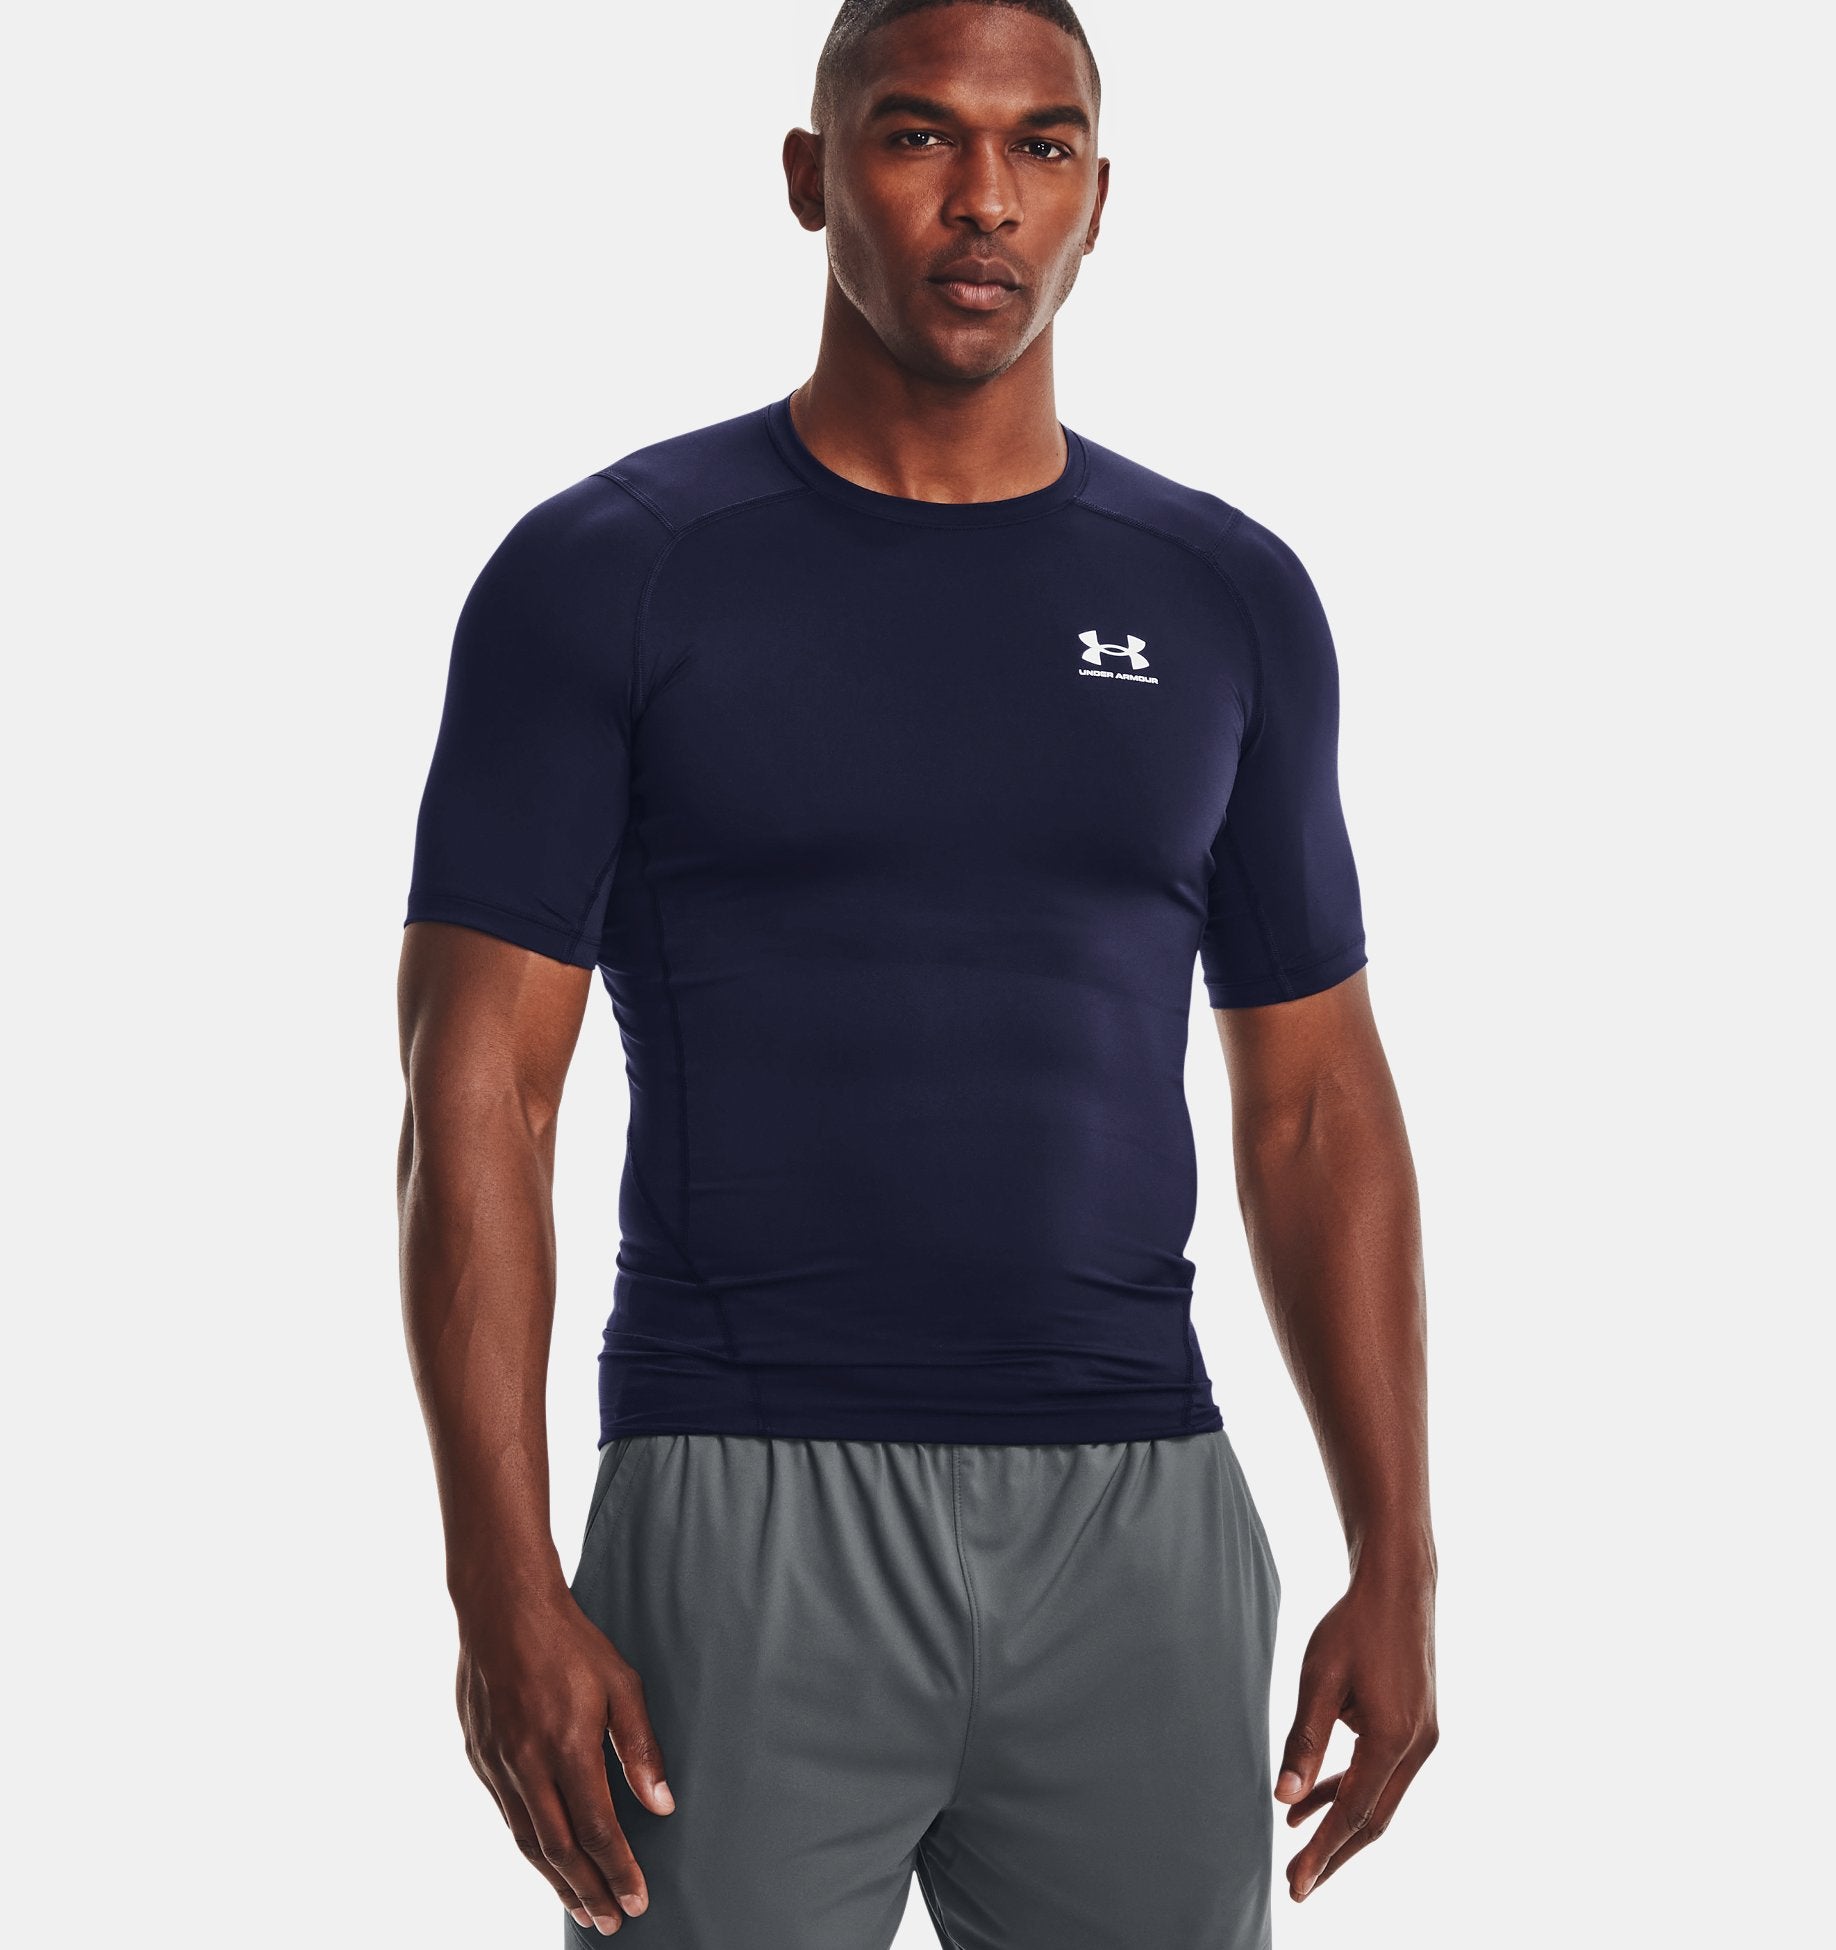 E75 Men's Short Sleeve Compression T-Shirt – Enerskin